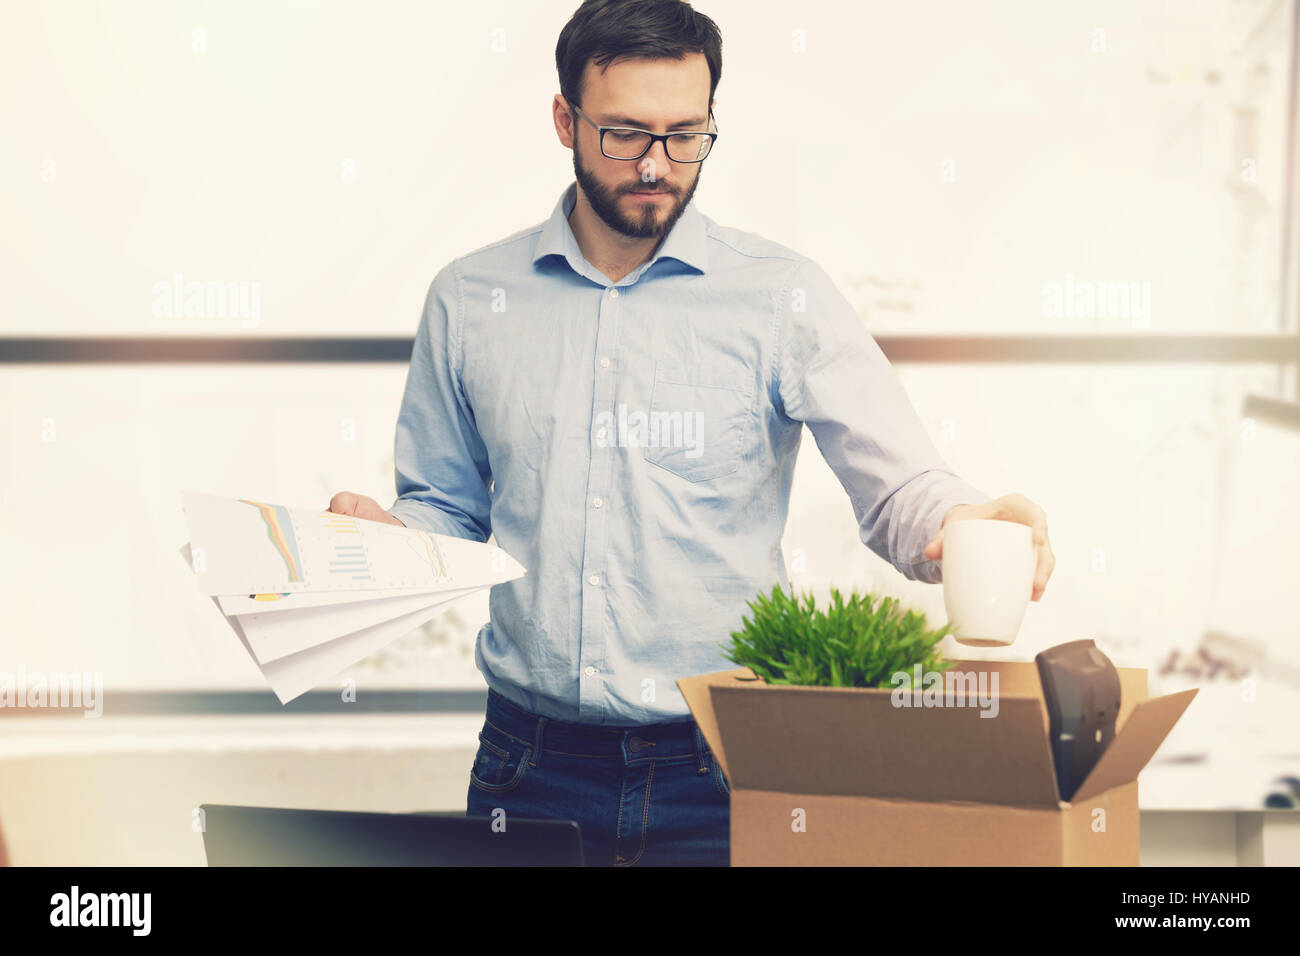 job loss - fired man putting his belongings in cardboard box Stock Photo